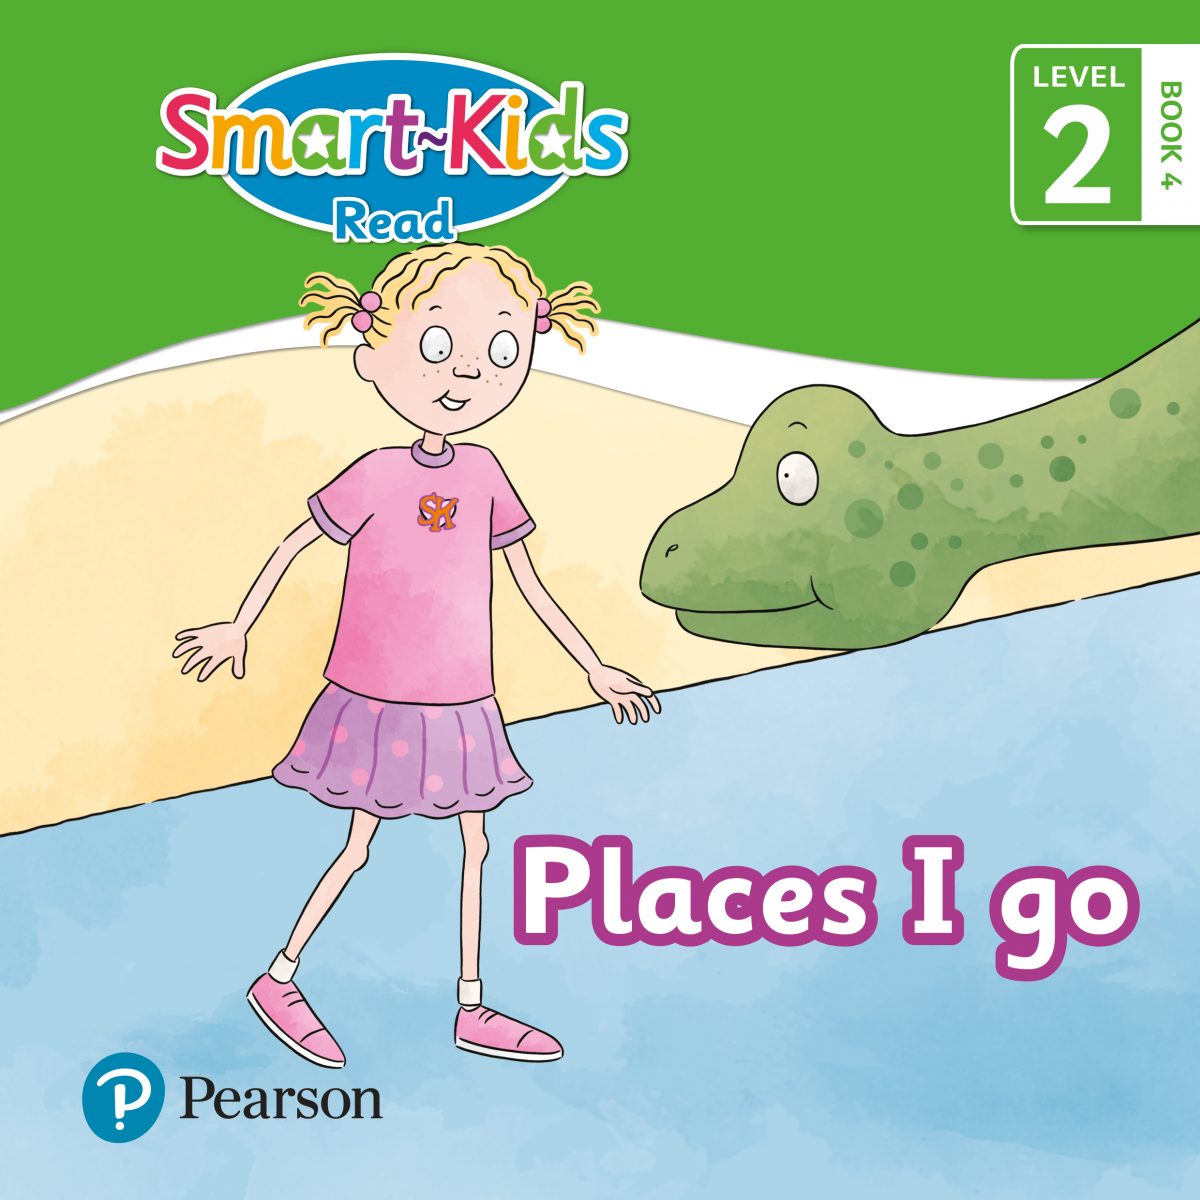 Smart-Kids Read! Level 2 Book 4: Places I go